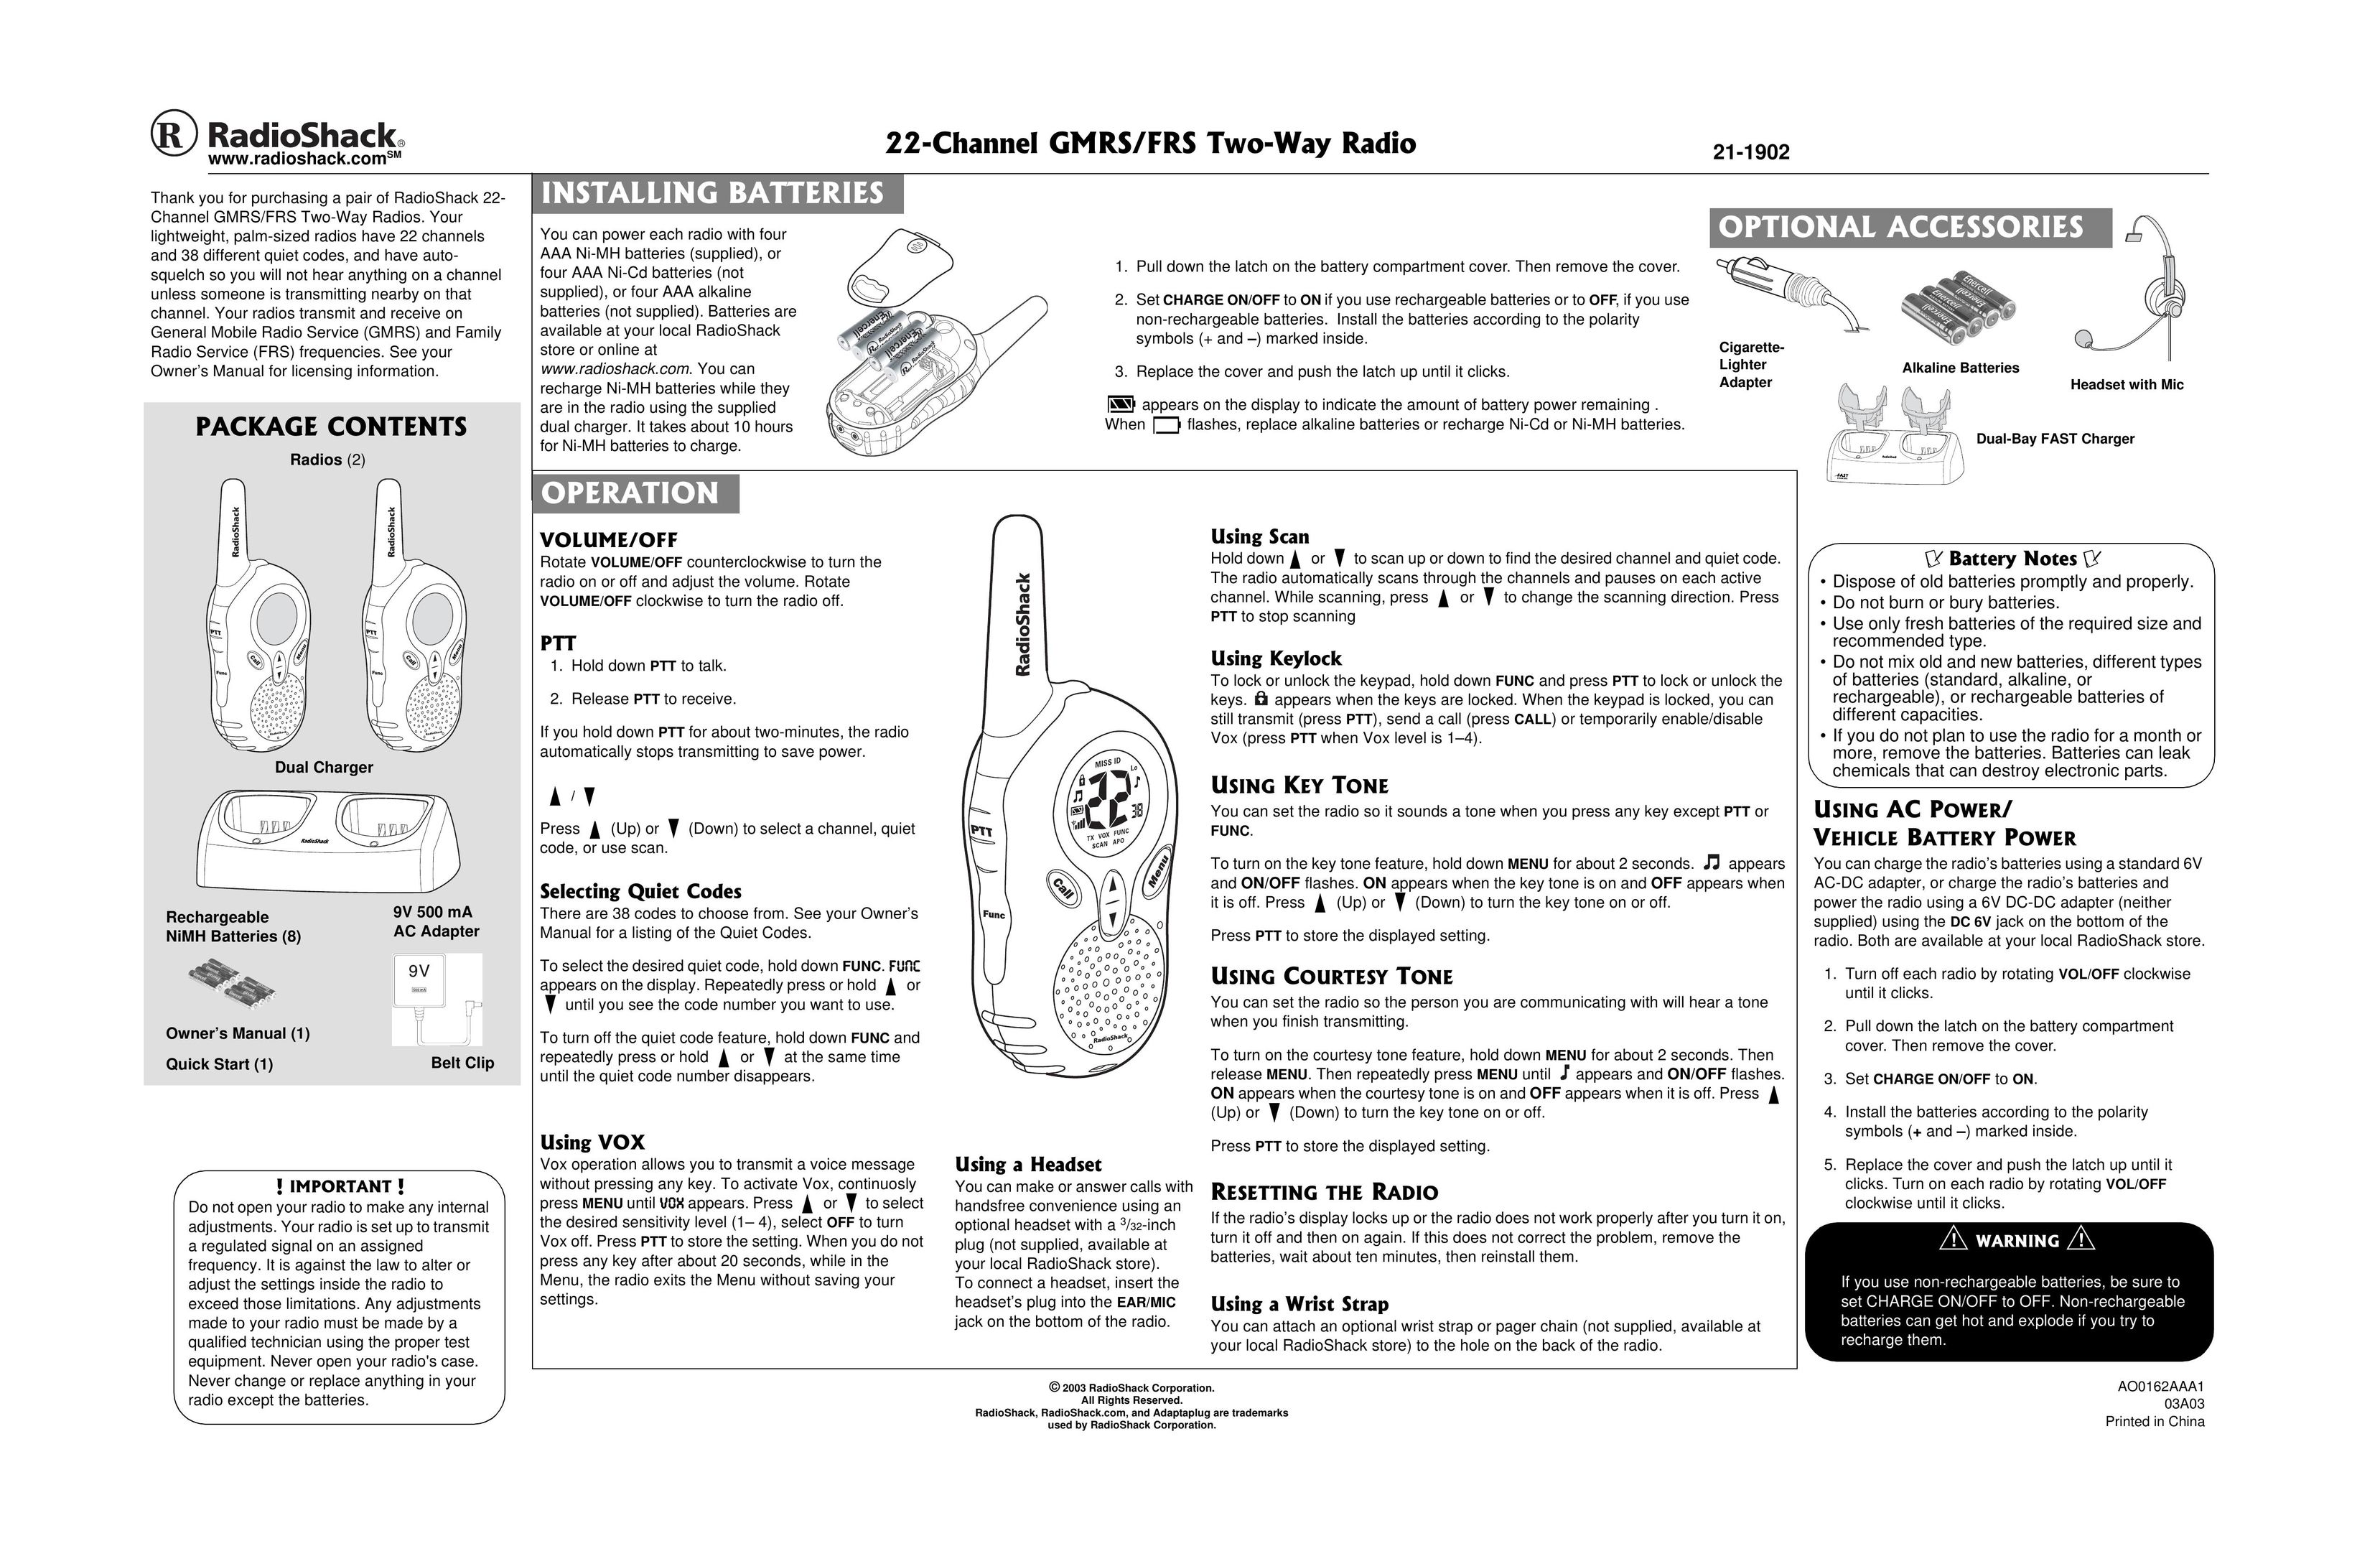 Radio Shack 21-190222 Two-Way Radio User Manual